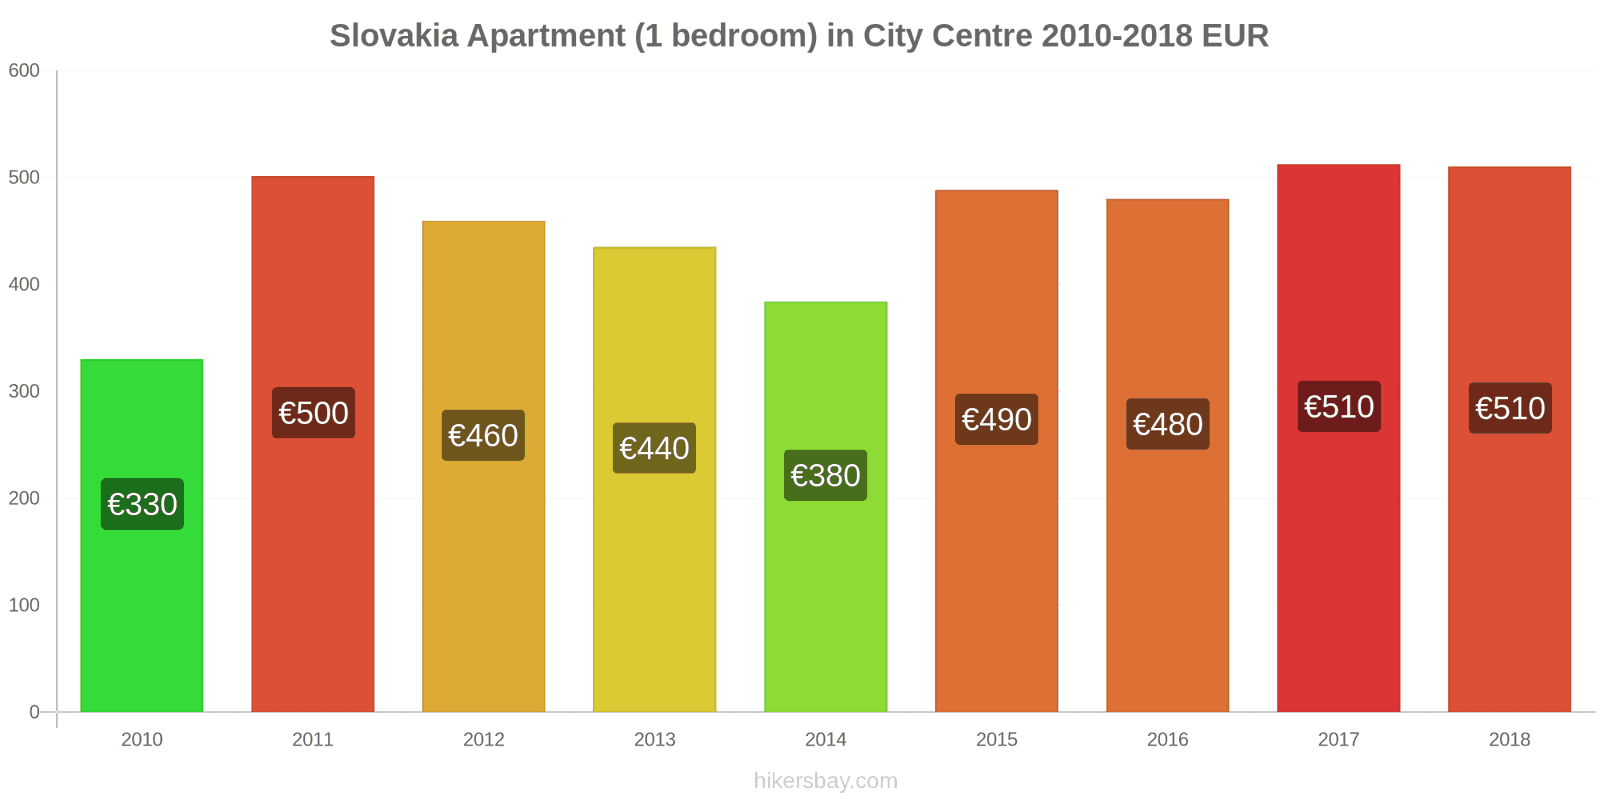 Slovakia price changes Apartment (1 bedroom) in city centre hikersbay.com